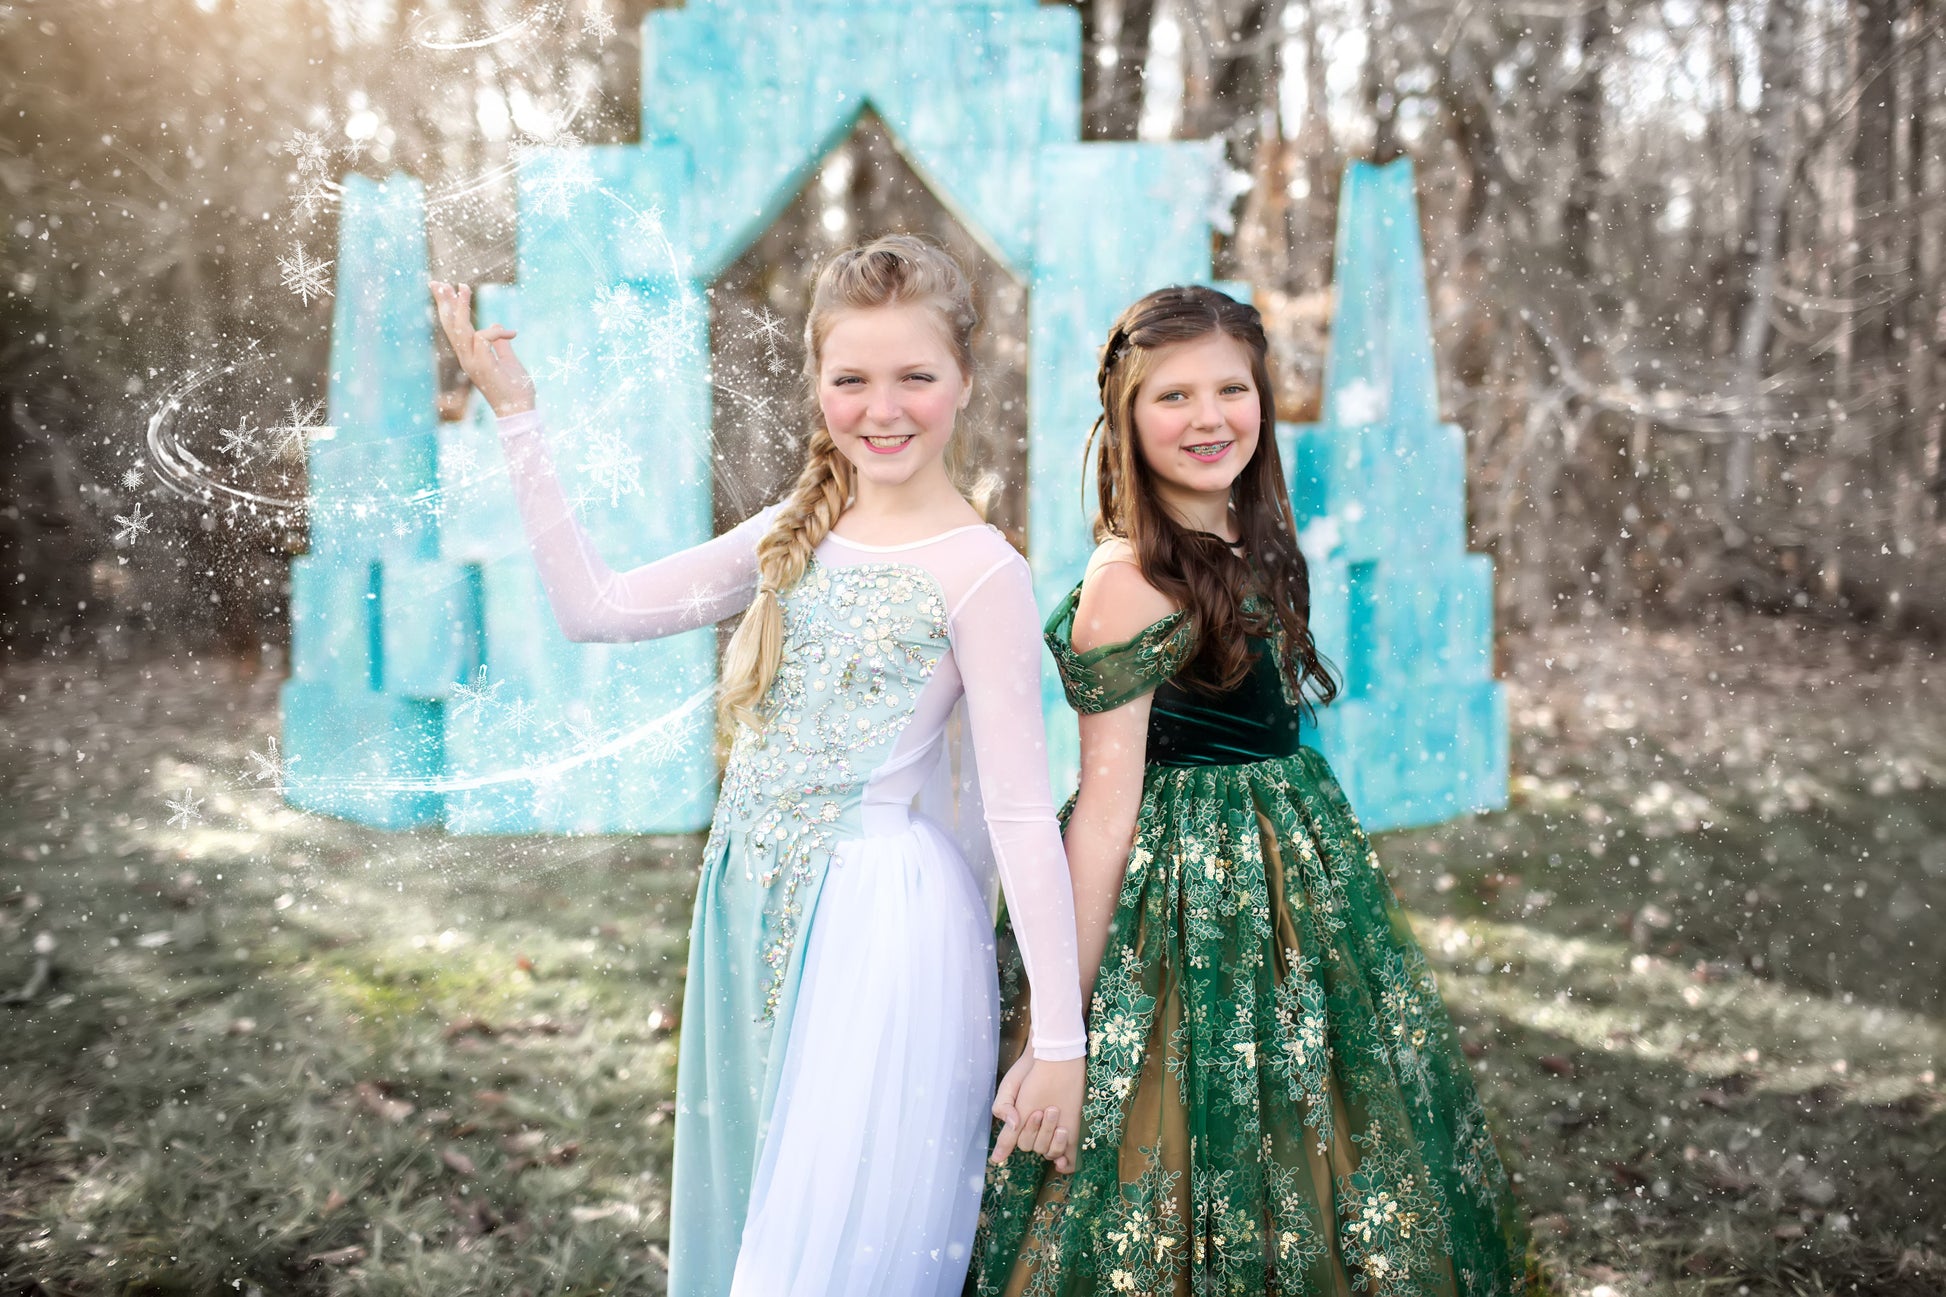 Frozen Elsa Disney inspired Dress Princess costume IN STOCK New FREE SHIP  ZG8 | eBay